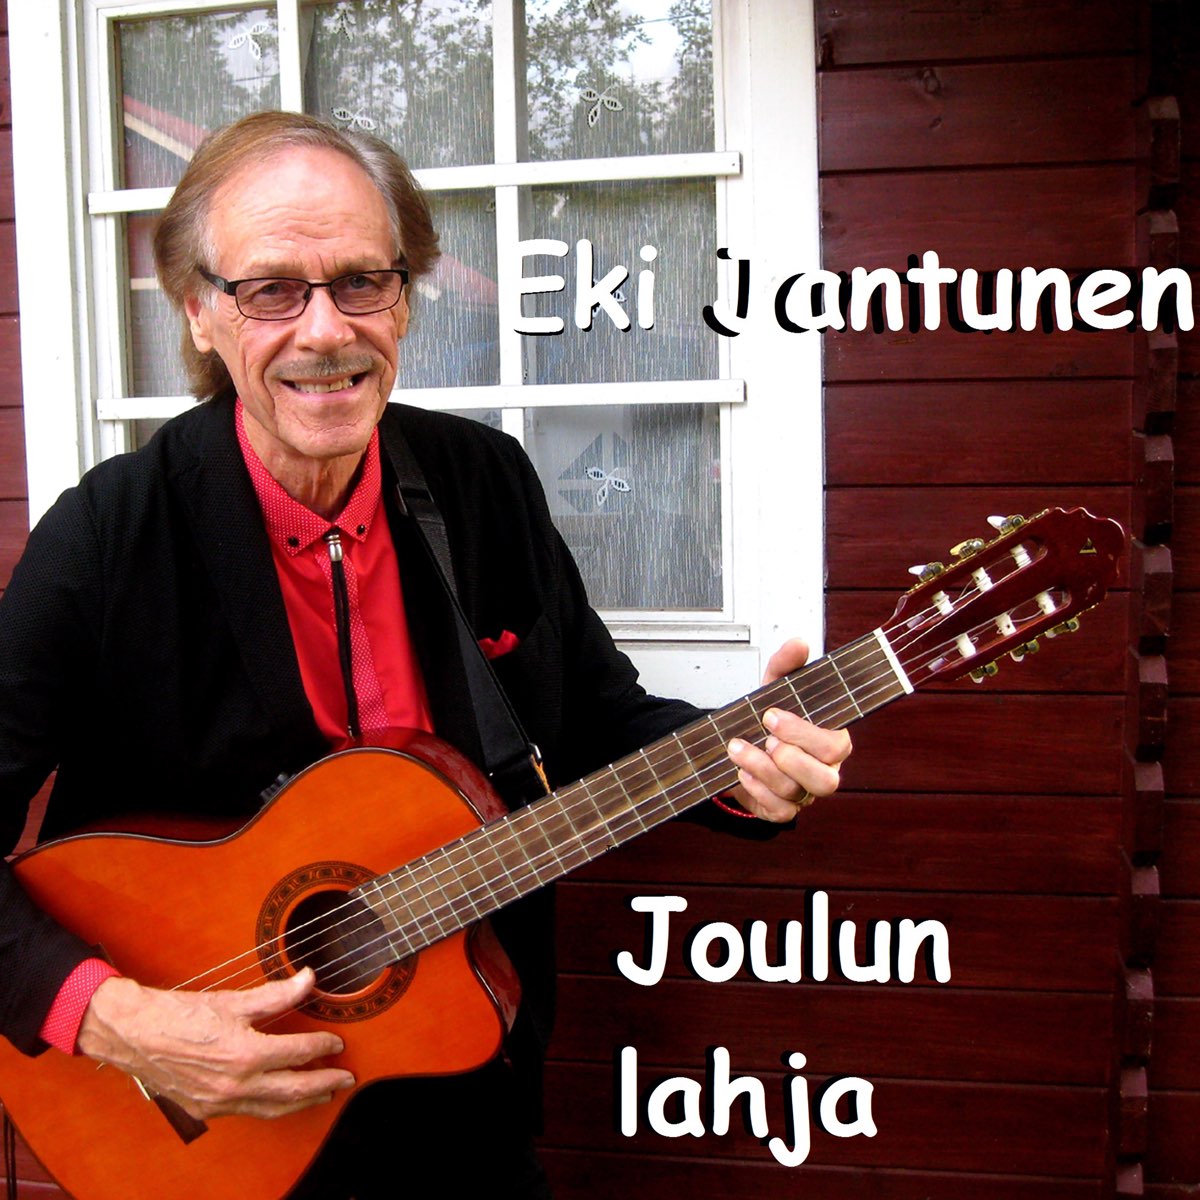 Joulun lahja - Single - Album by Eki Jantunen - Apple Music